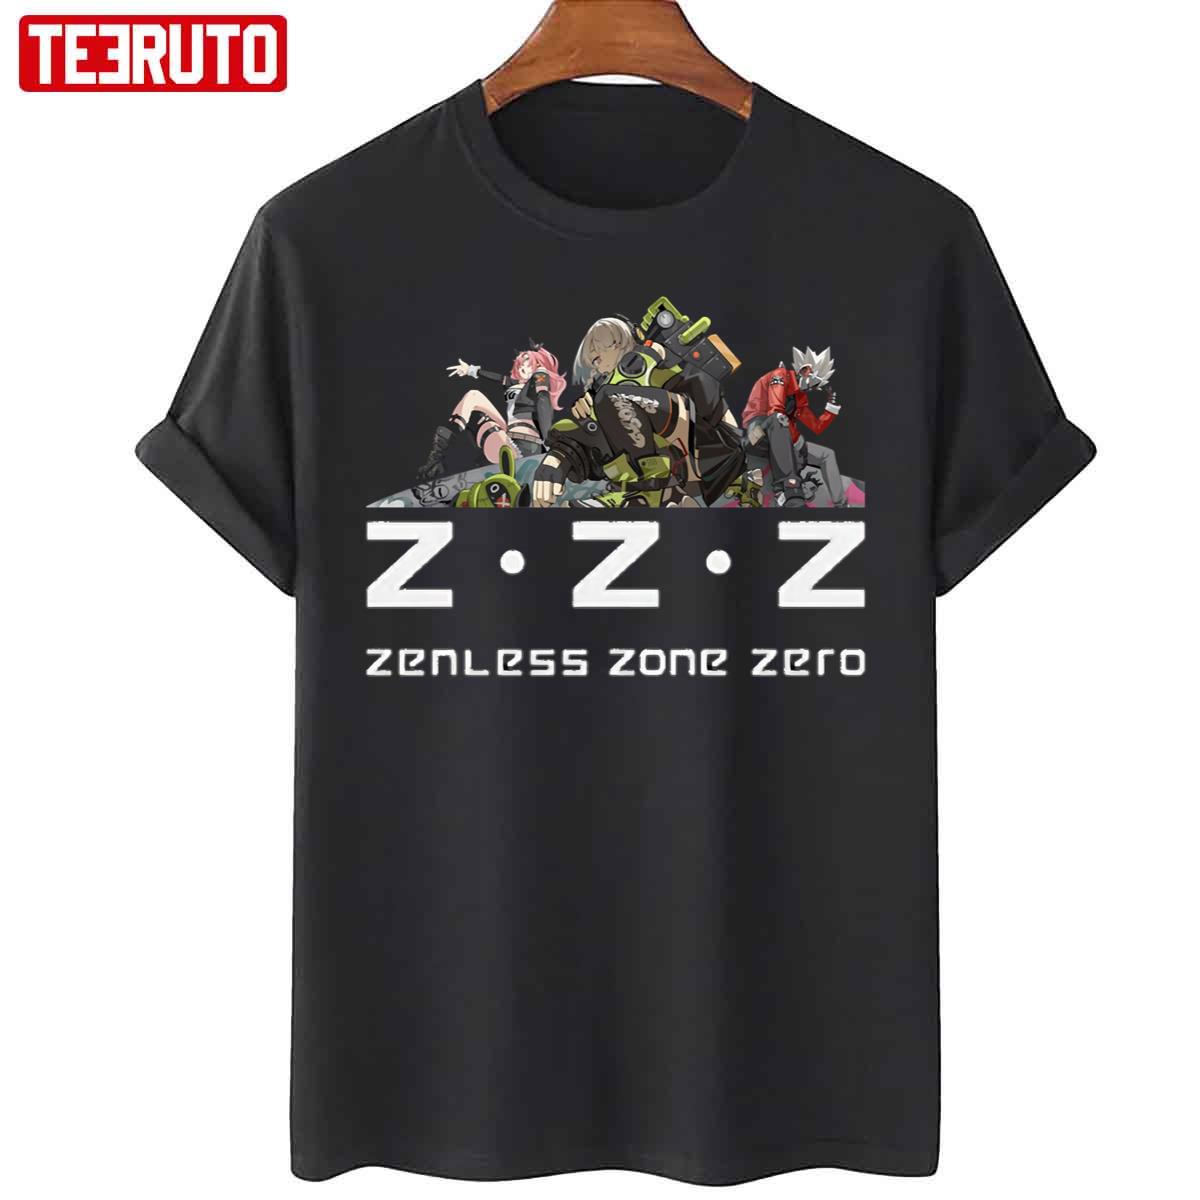 Zenless Zone Zero Unisex T-Shirt